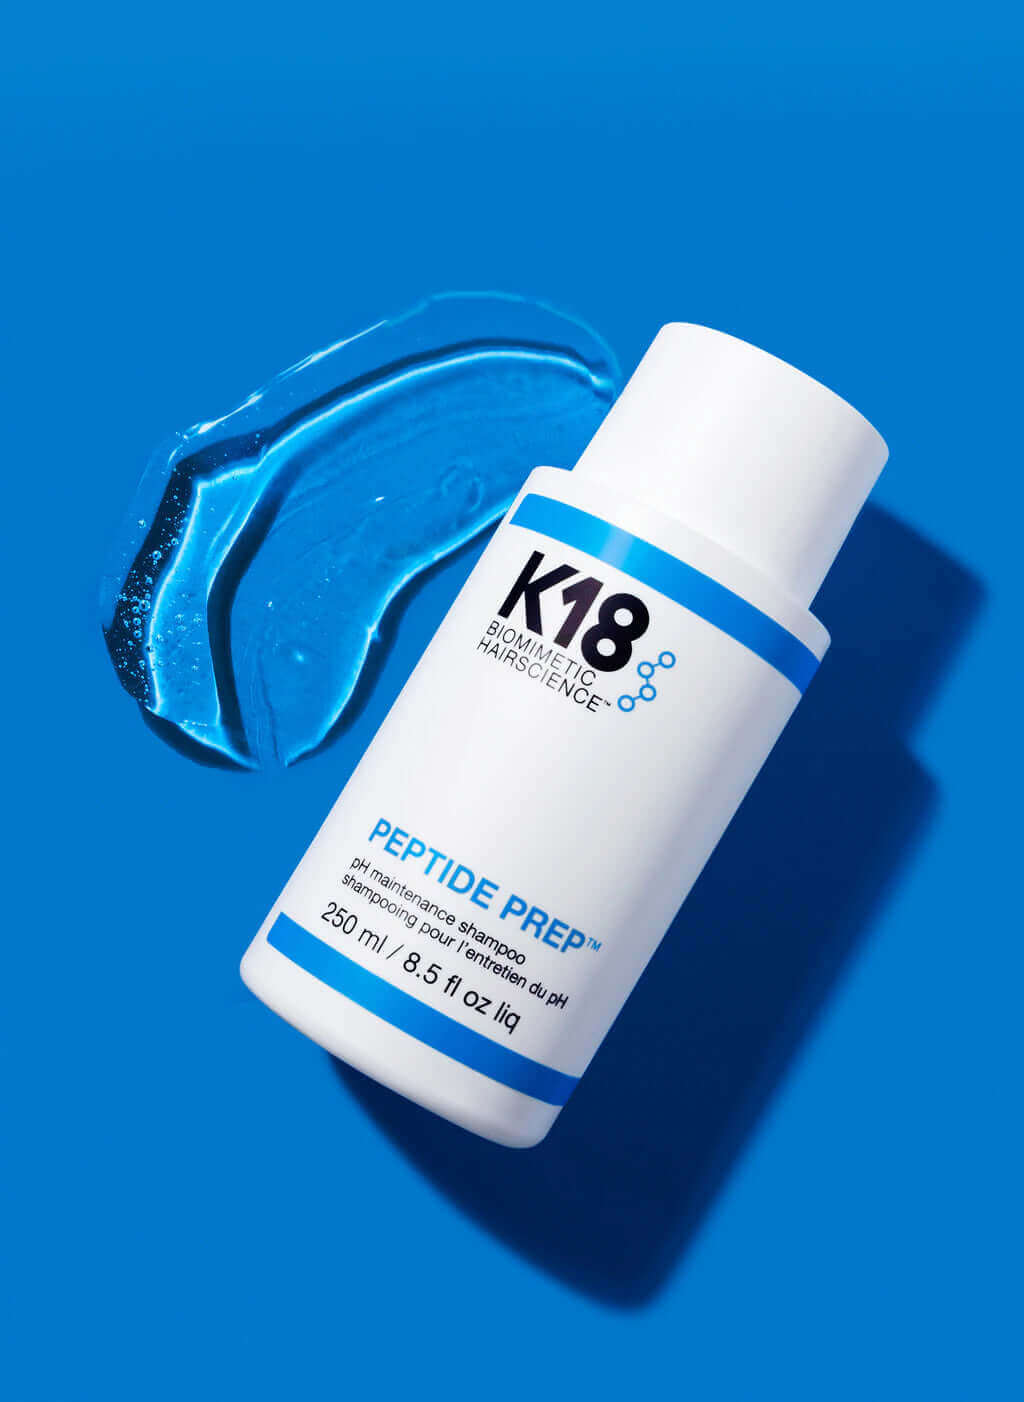 K18 PEPTIDE PREP pH Maintenance Shampoo a Shampoo from Simply Colour Hair Salon Studio & Online Store